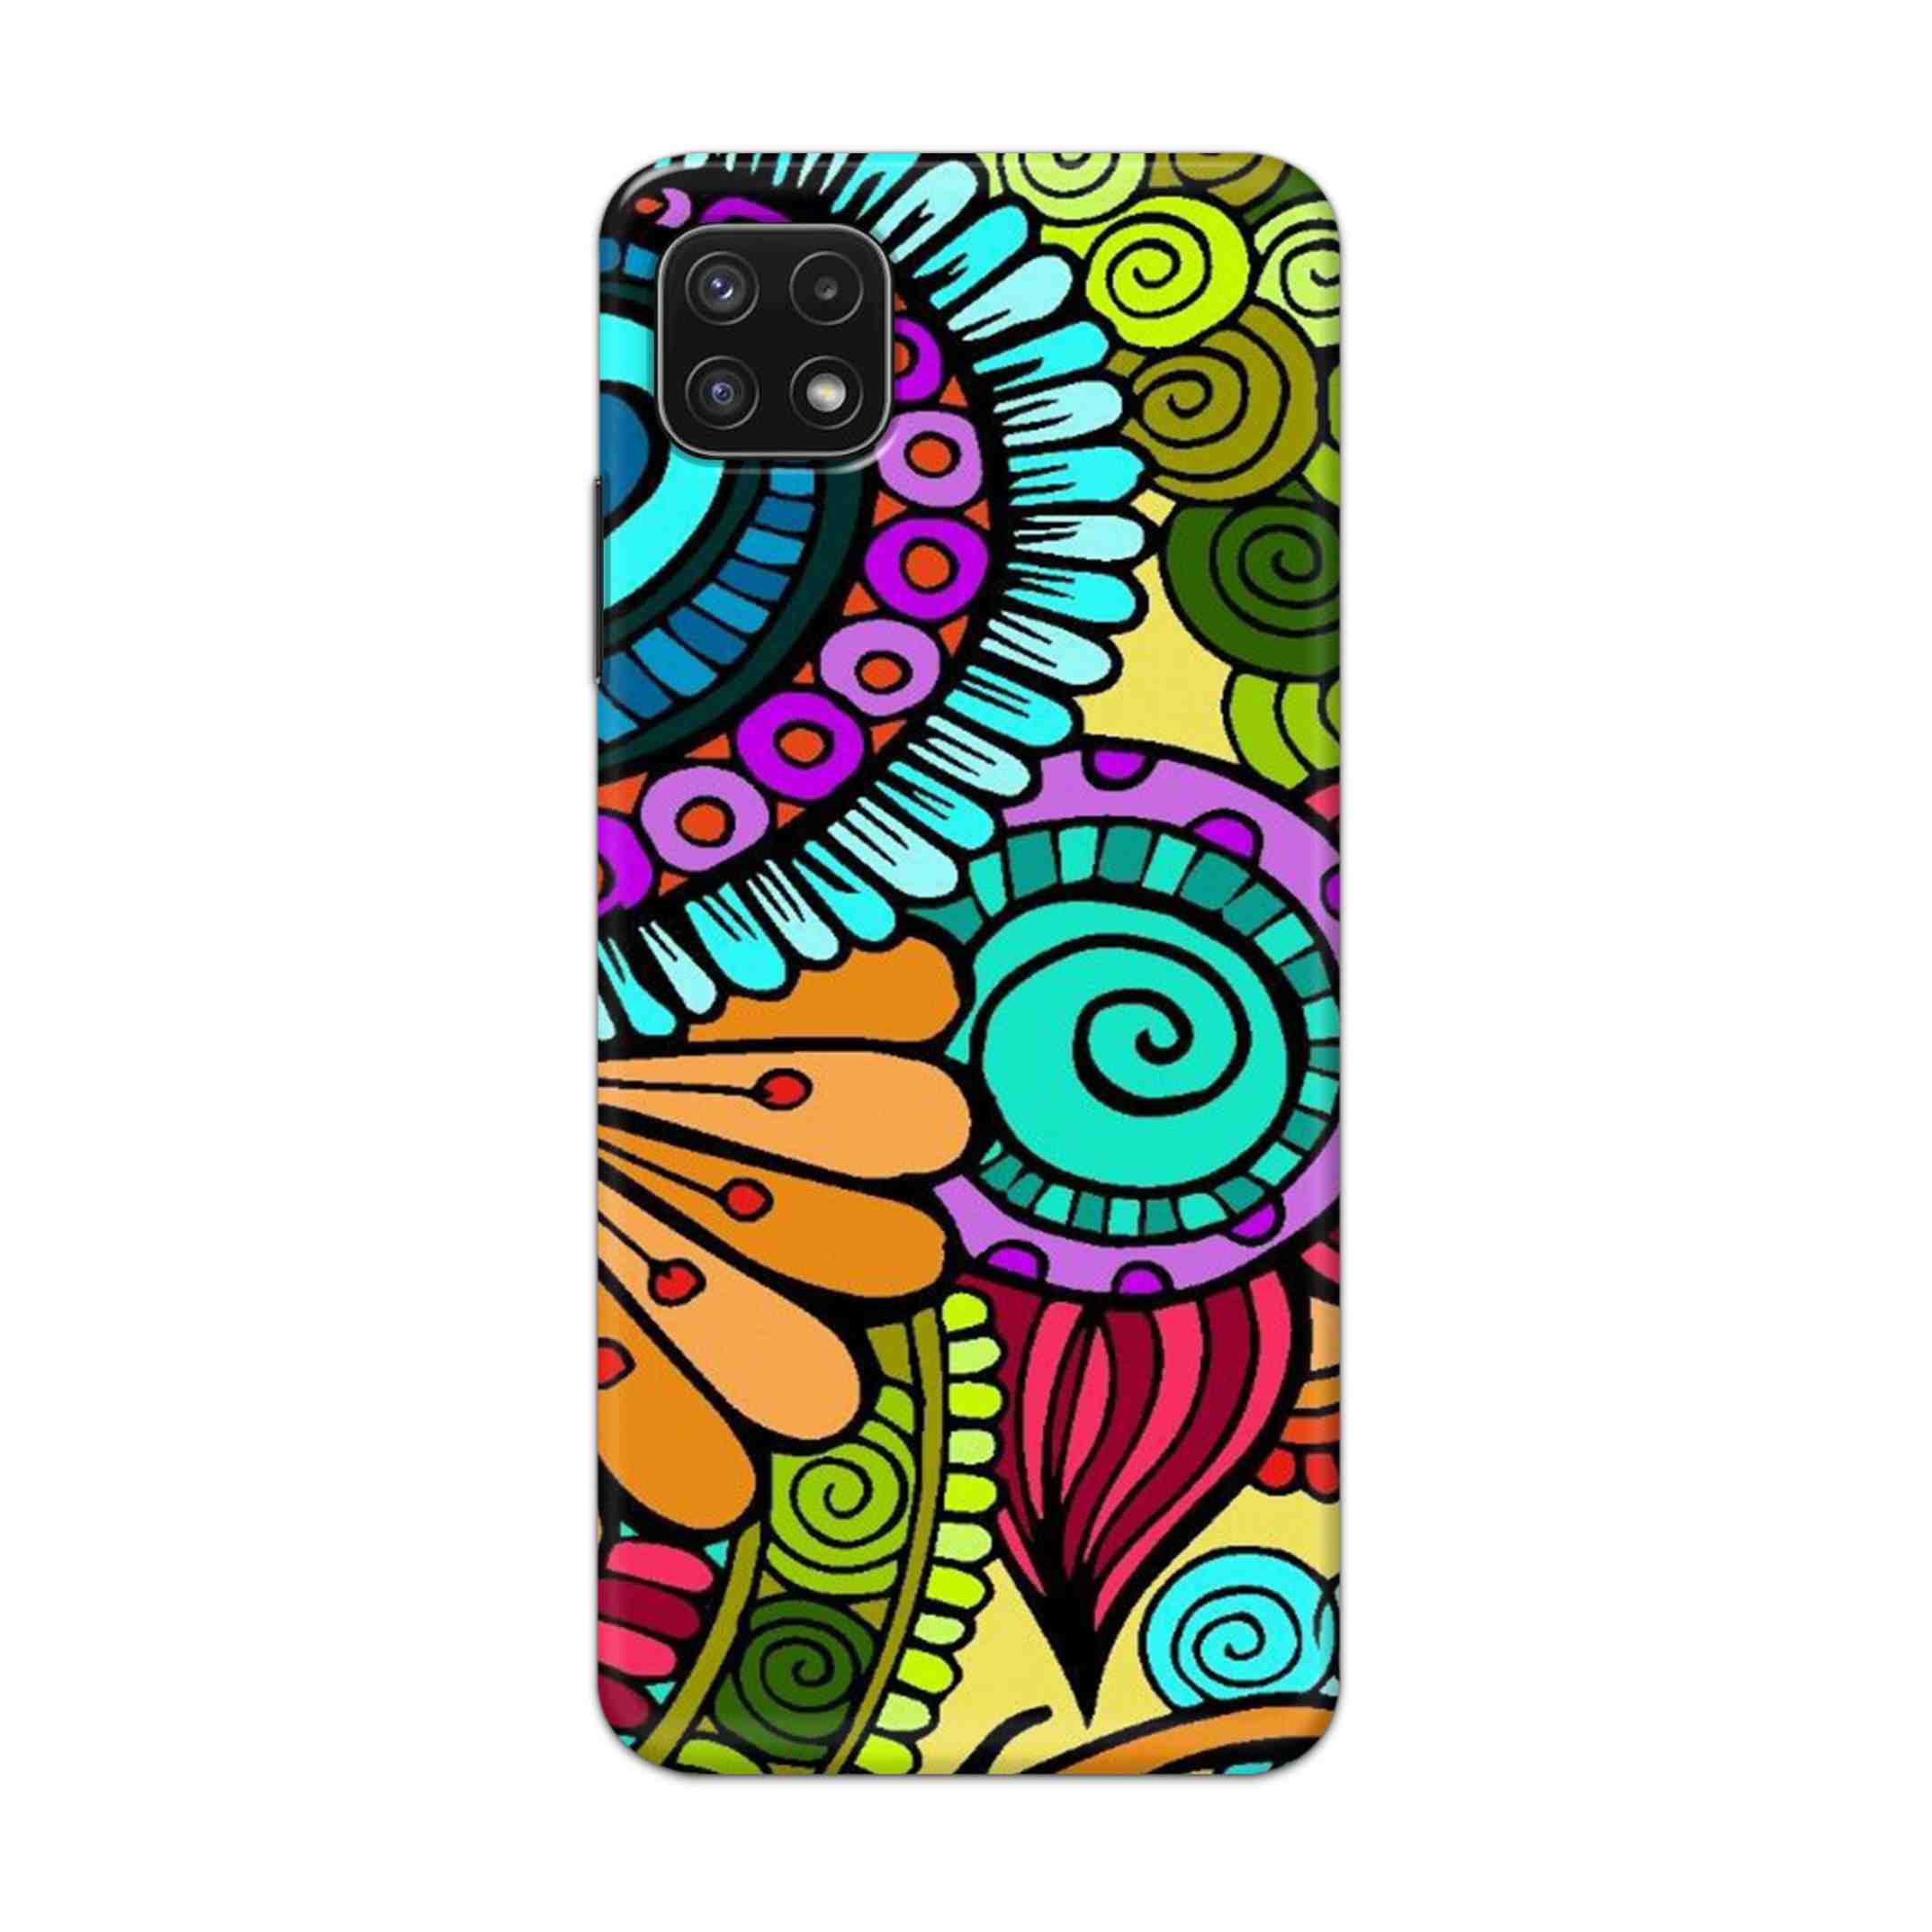 Buy The Kalachakra Mandala Hard Back Mobile Phone Case Cover For Samsung A22 5G Online